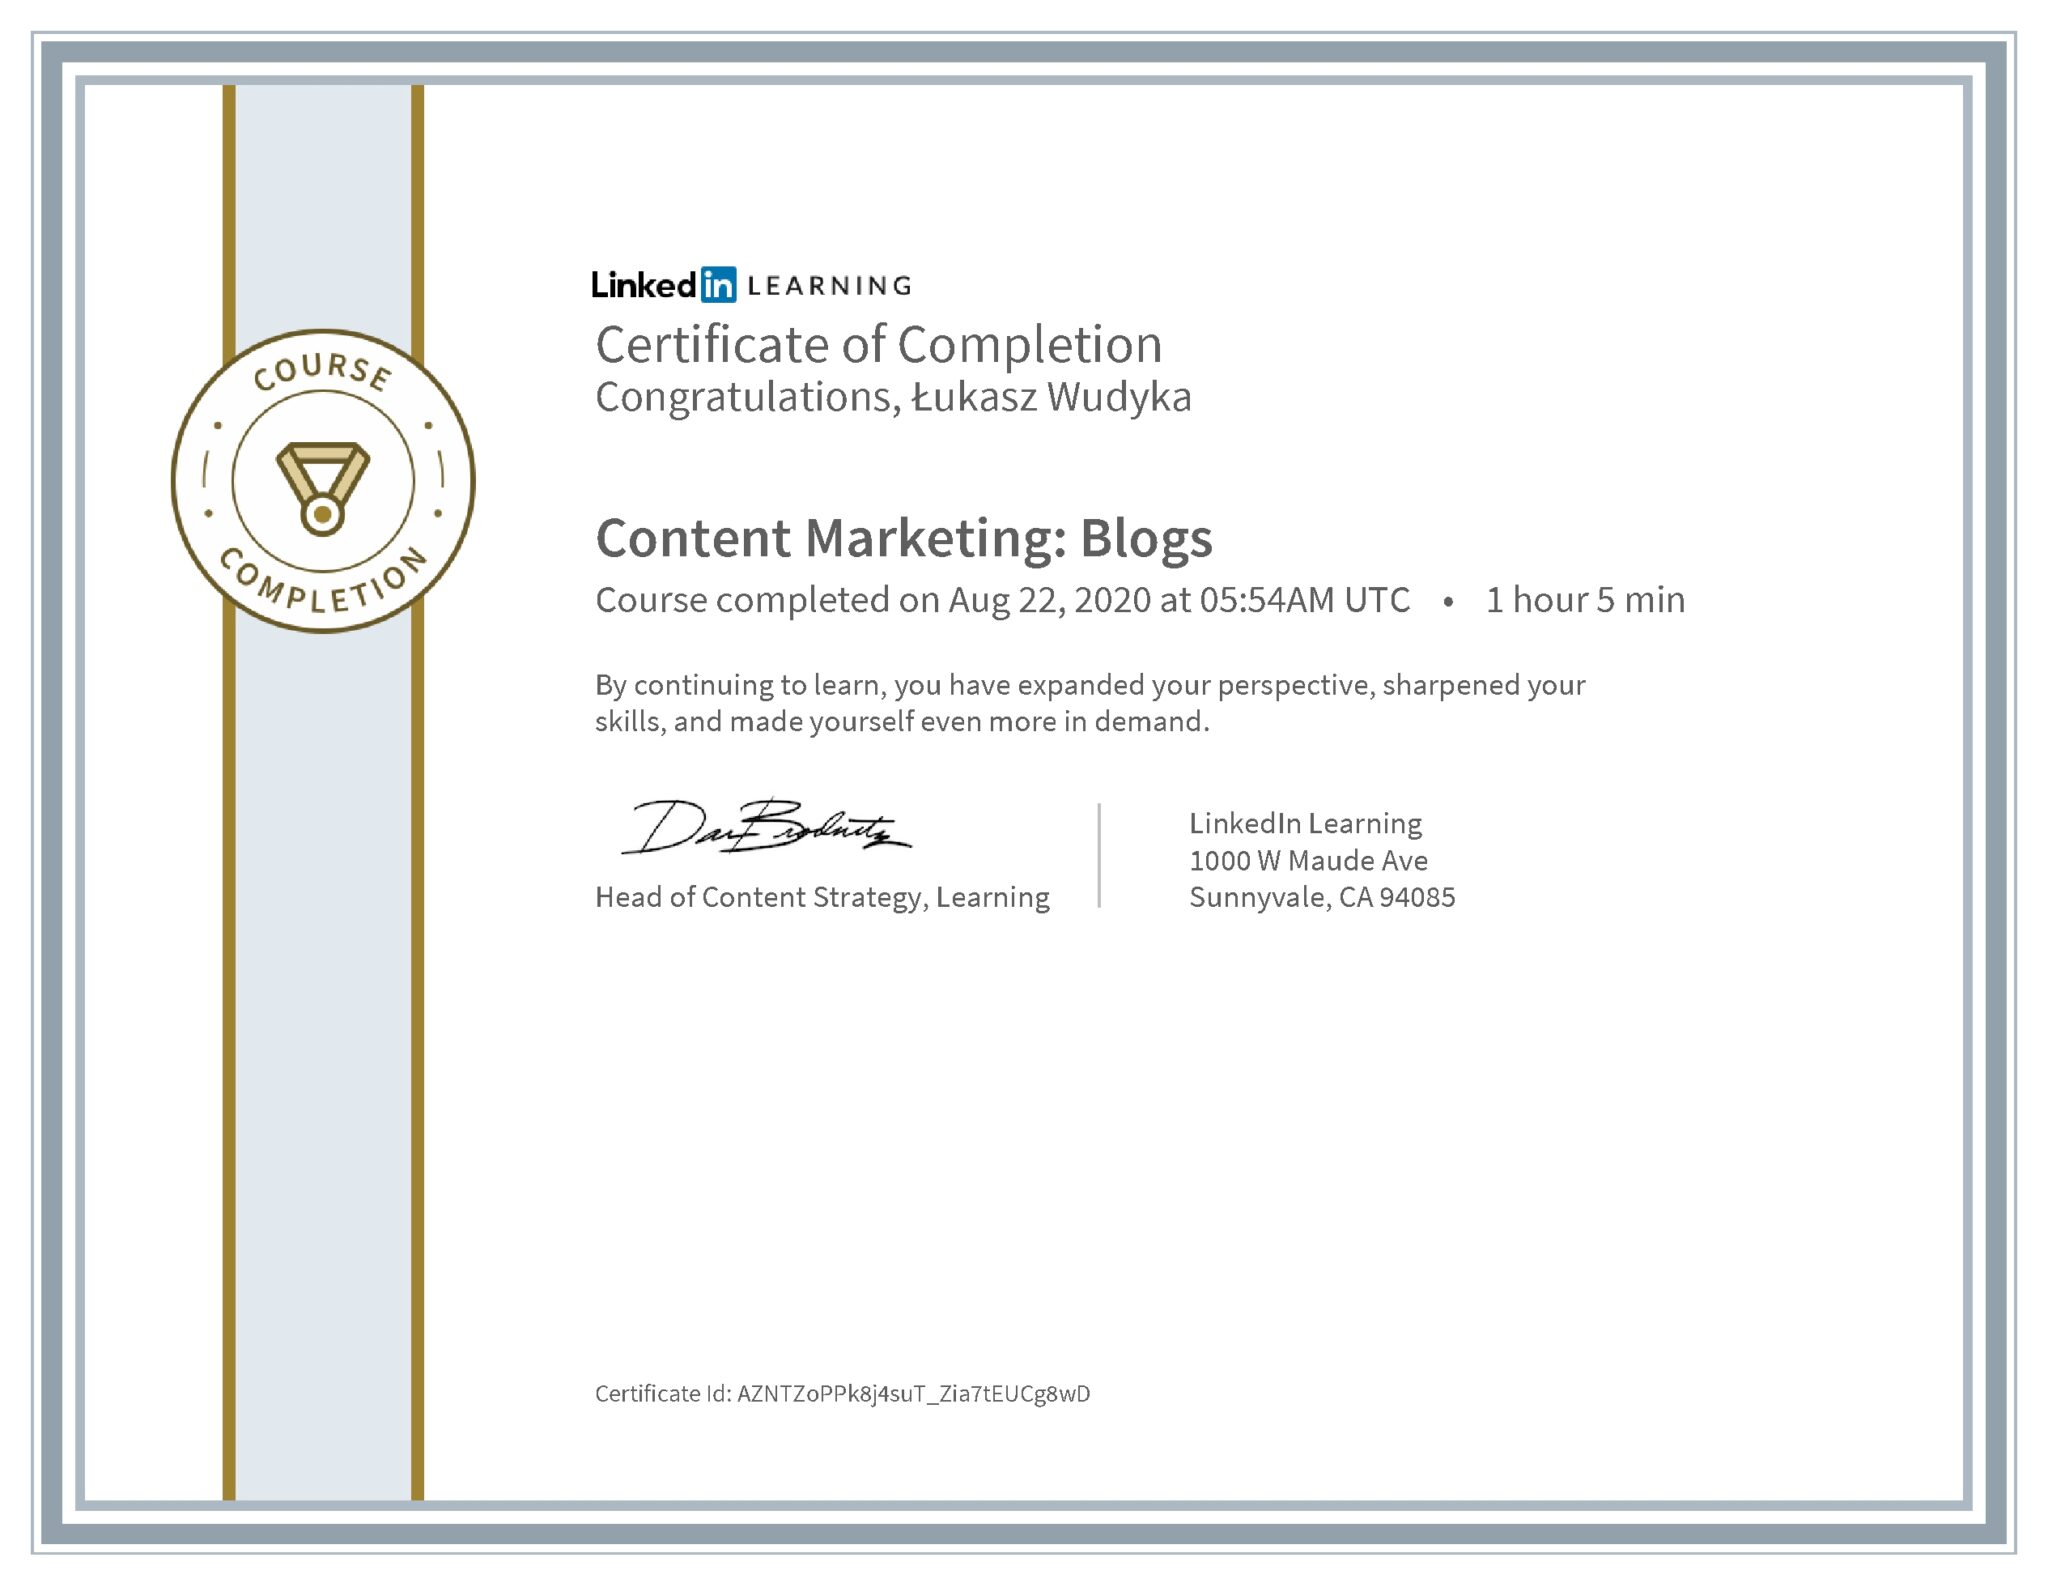 Łukasz Wudyka certyfikat LinkedIn Content Marketing: Blogs